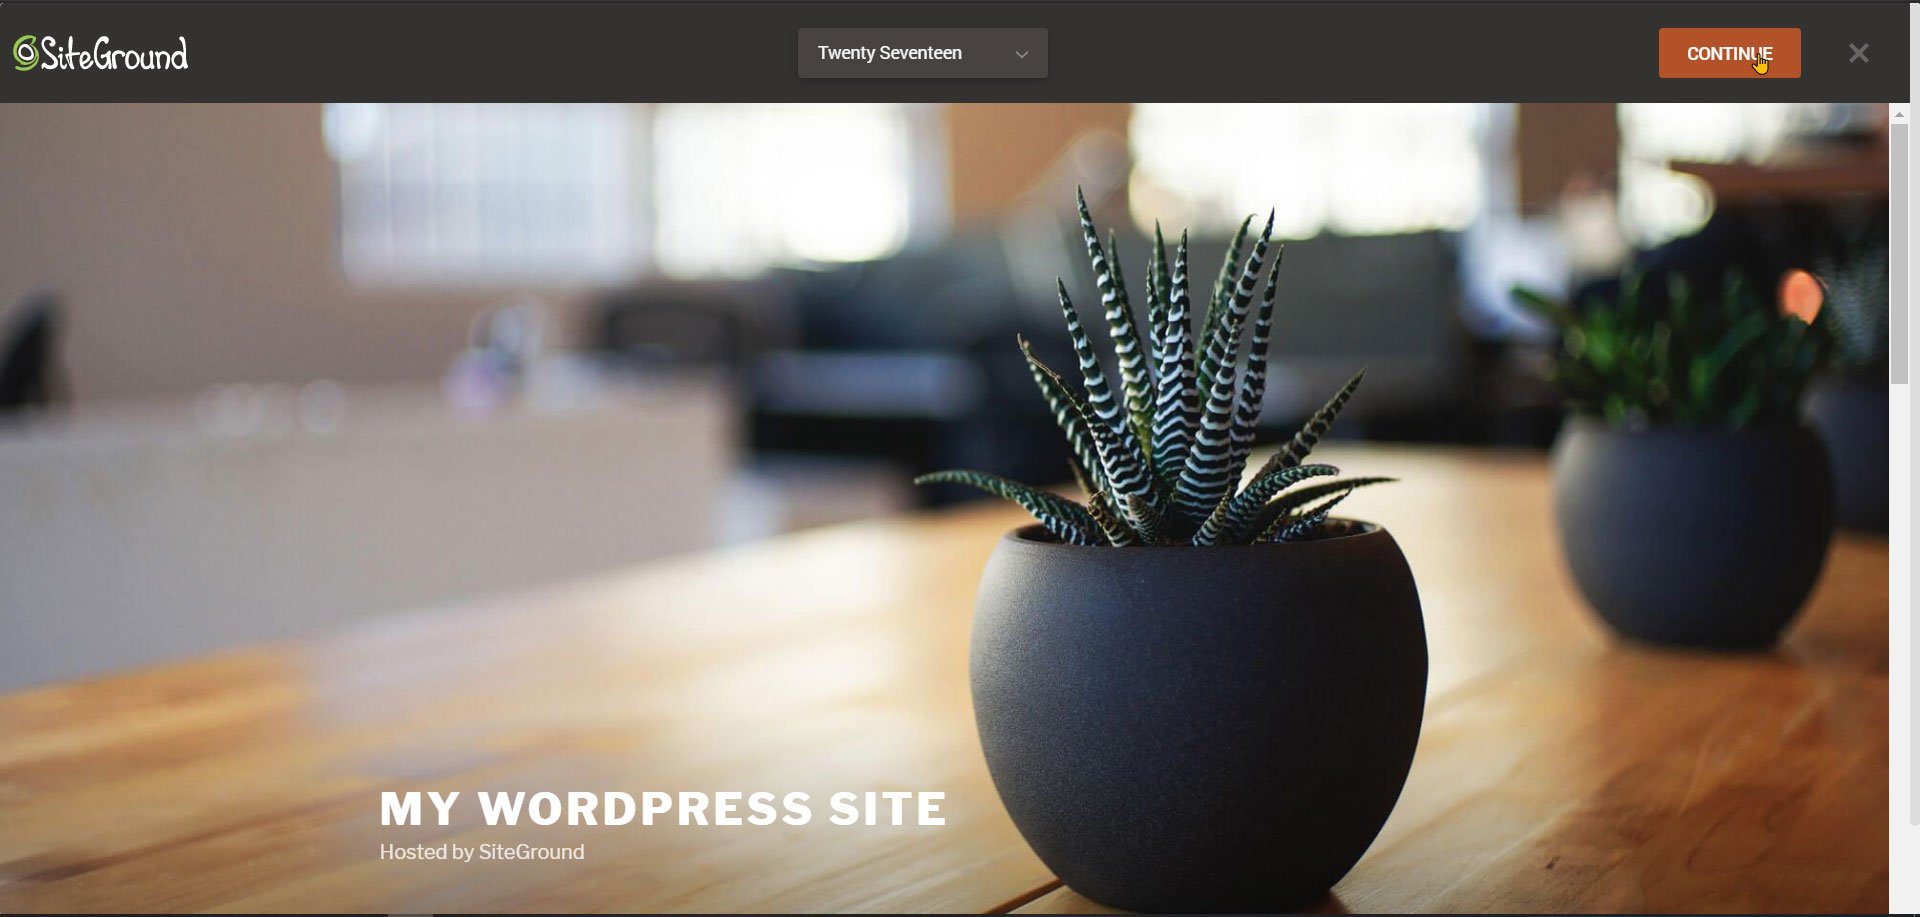 Installing WordPress on SiteGround Step 8.1